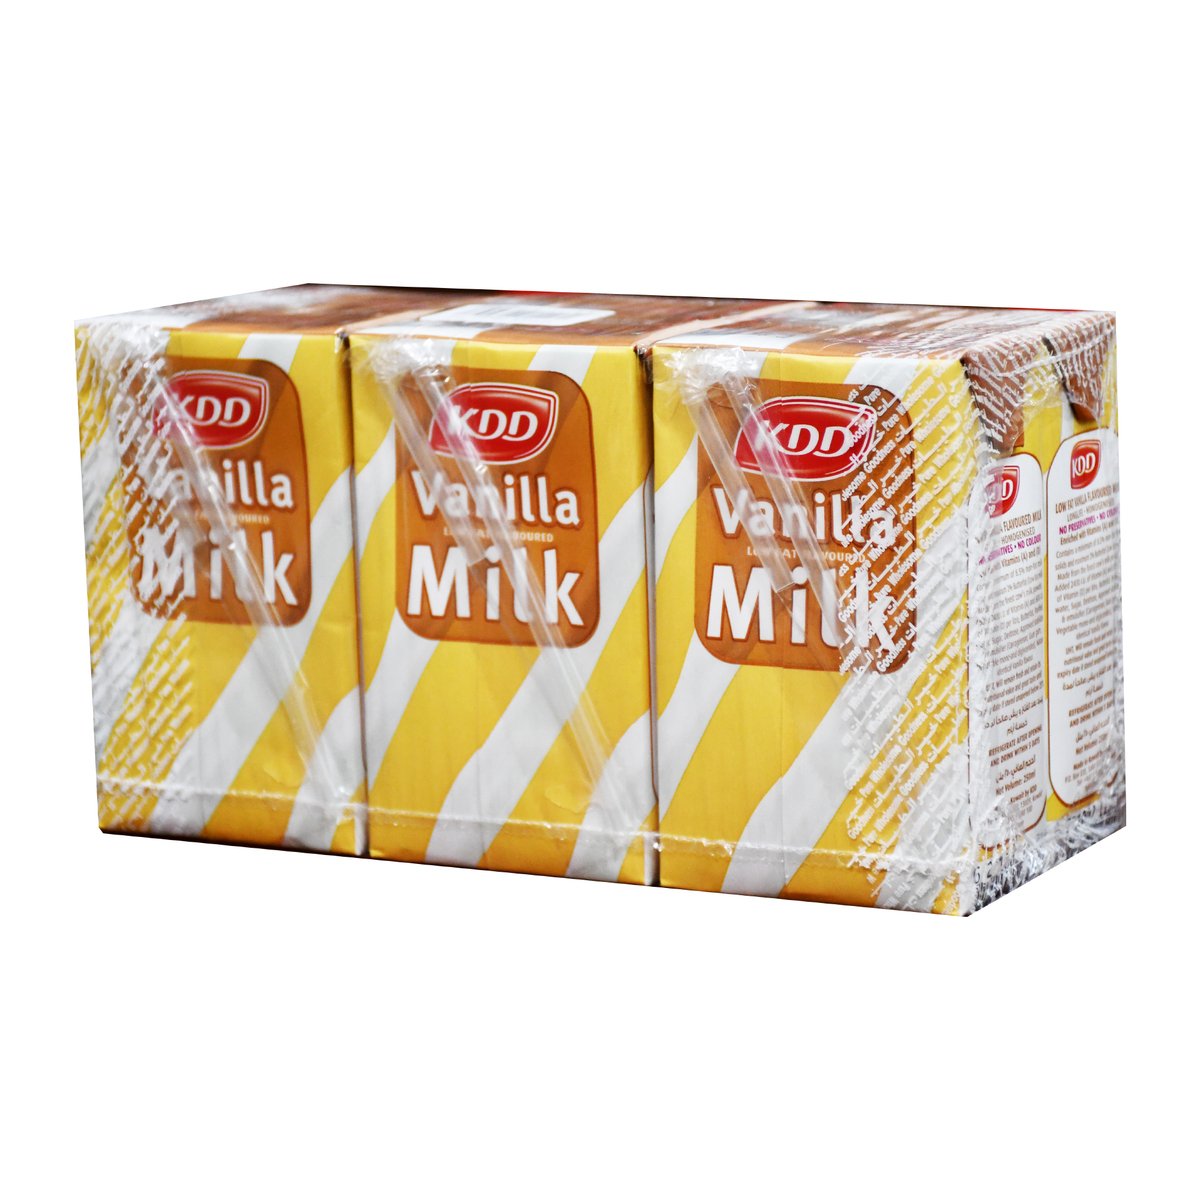 KDD Vanilla Milk 6 x 250ml